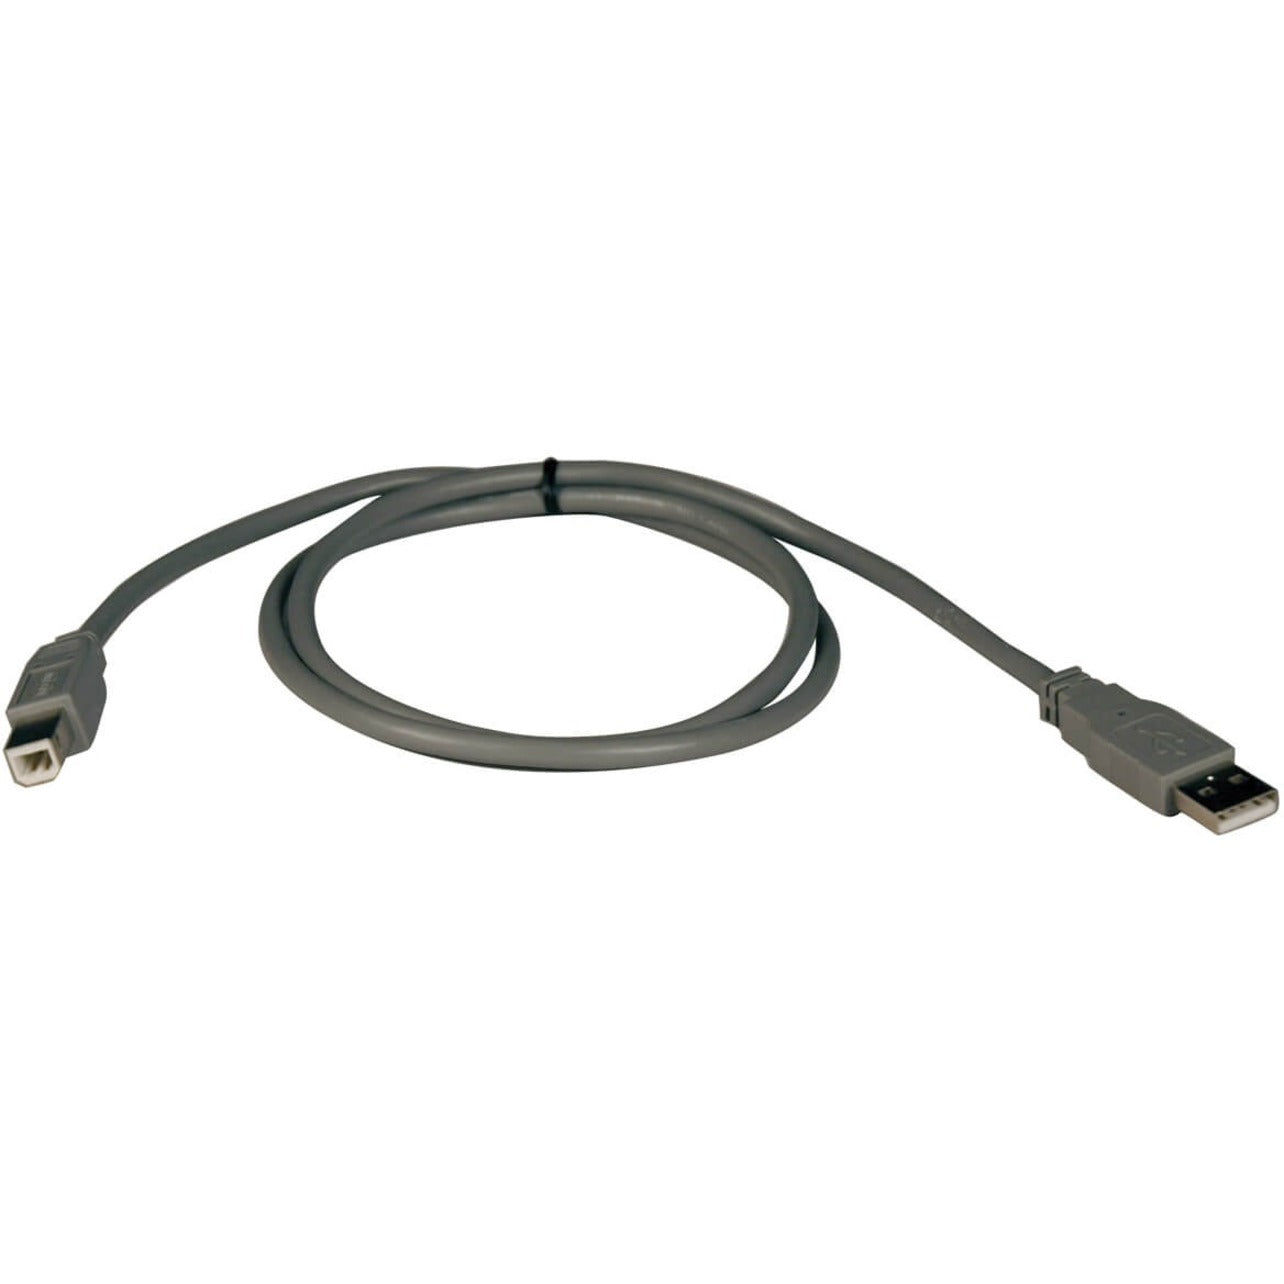 Tripp Lite U021-003 USB 2.0 Cable, 3 ft, Copper Conductor, Black